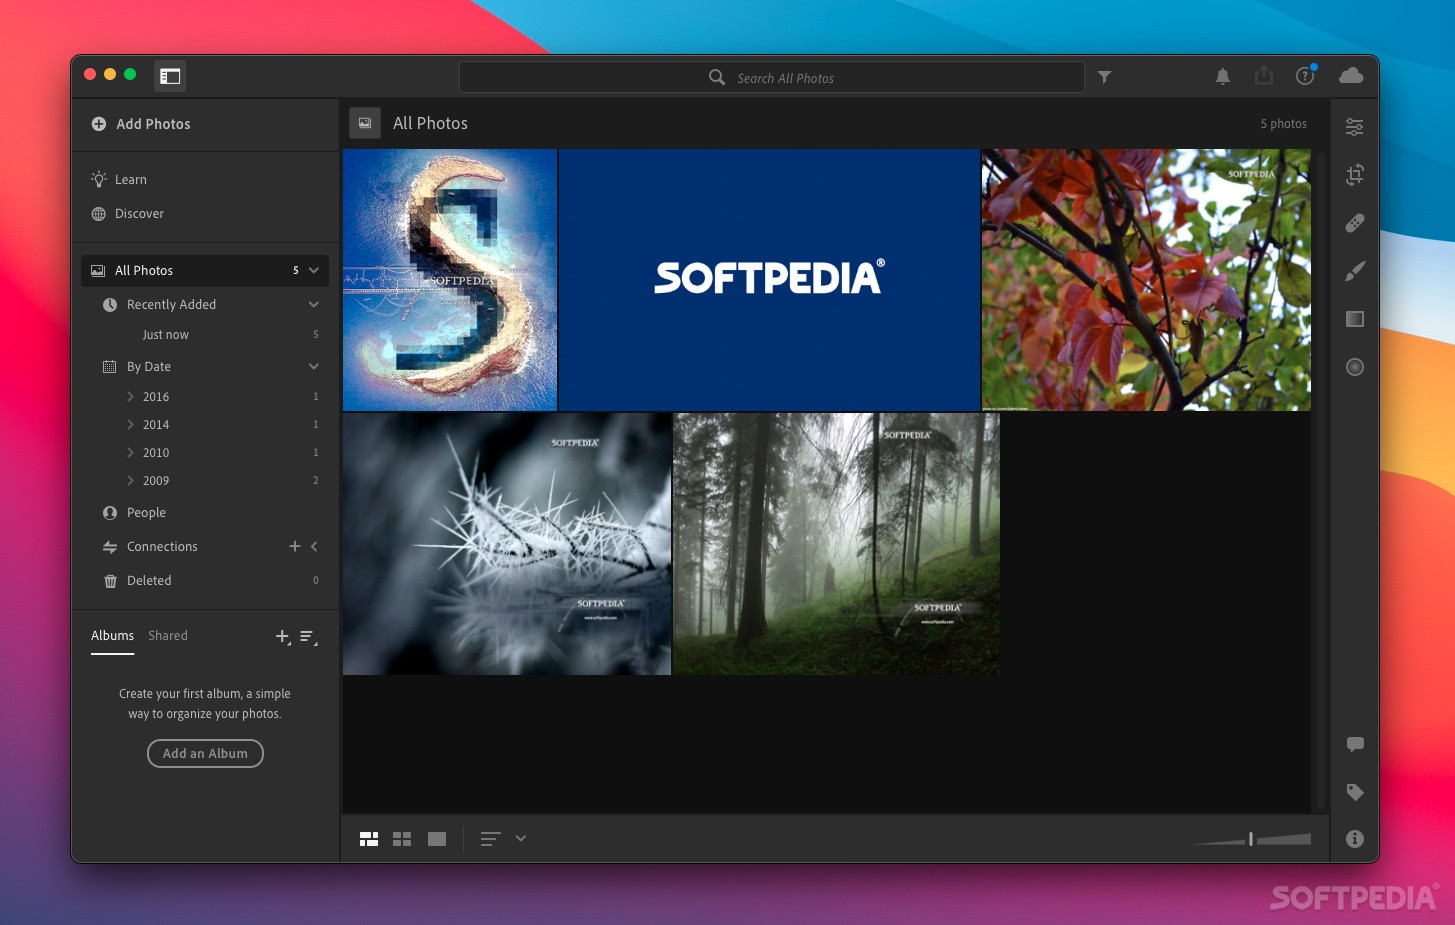 Adobe photoshop lightroom 3.4 for mac